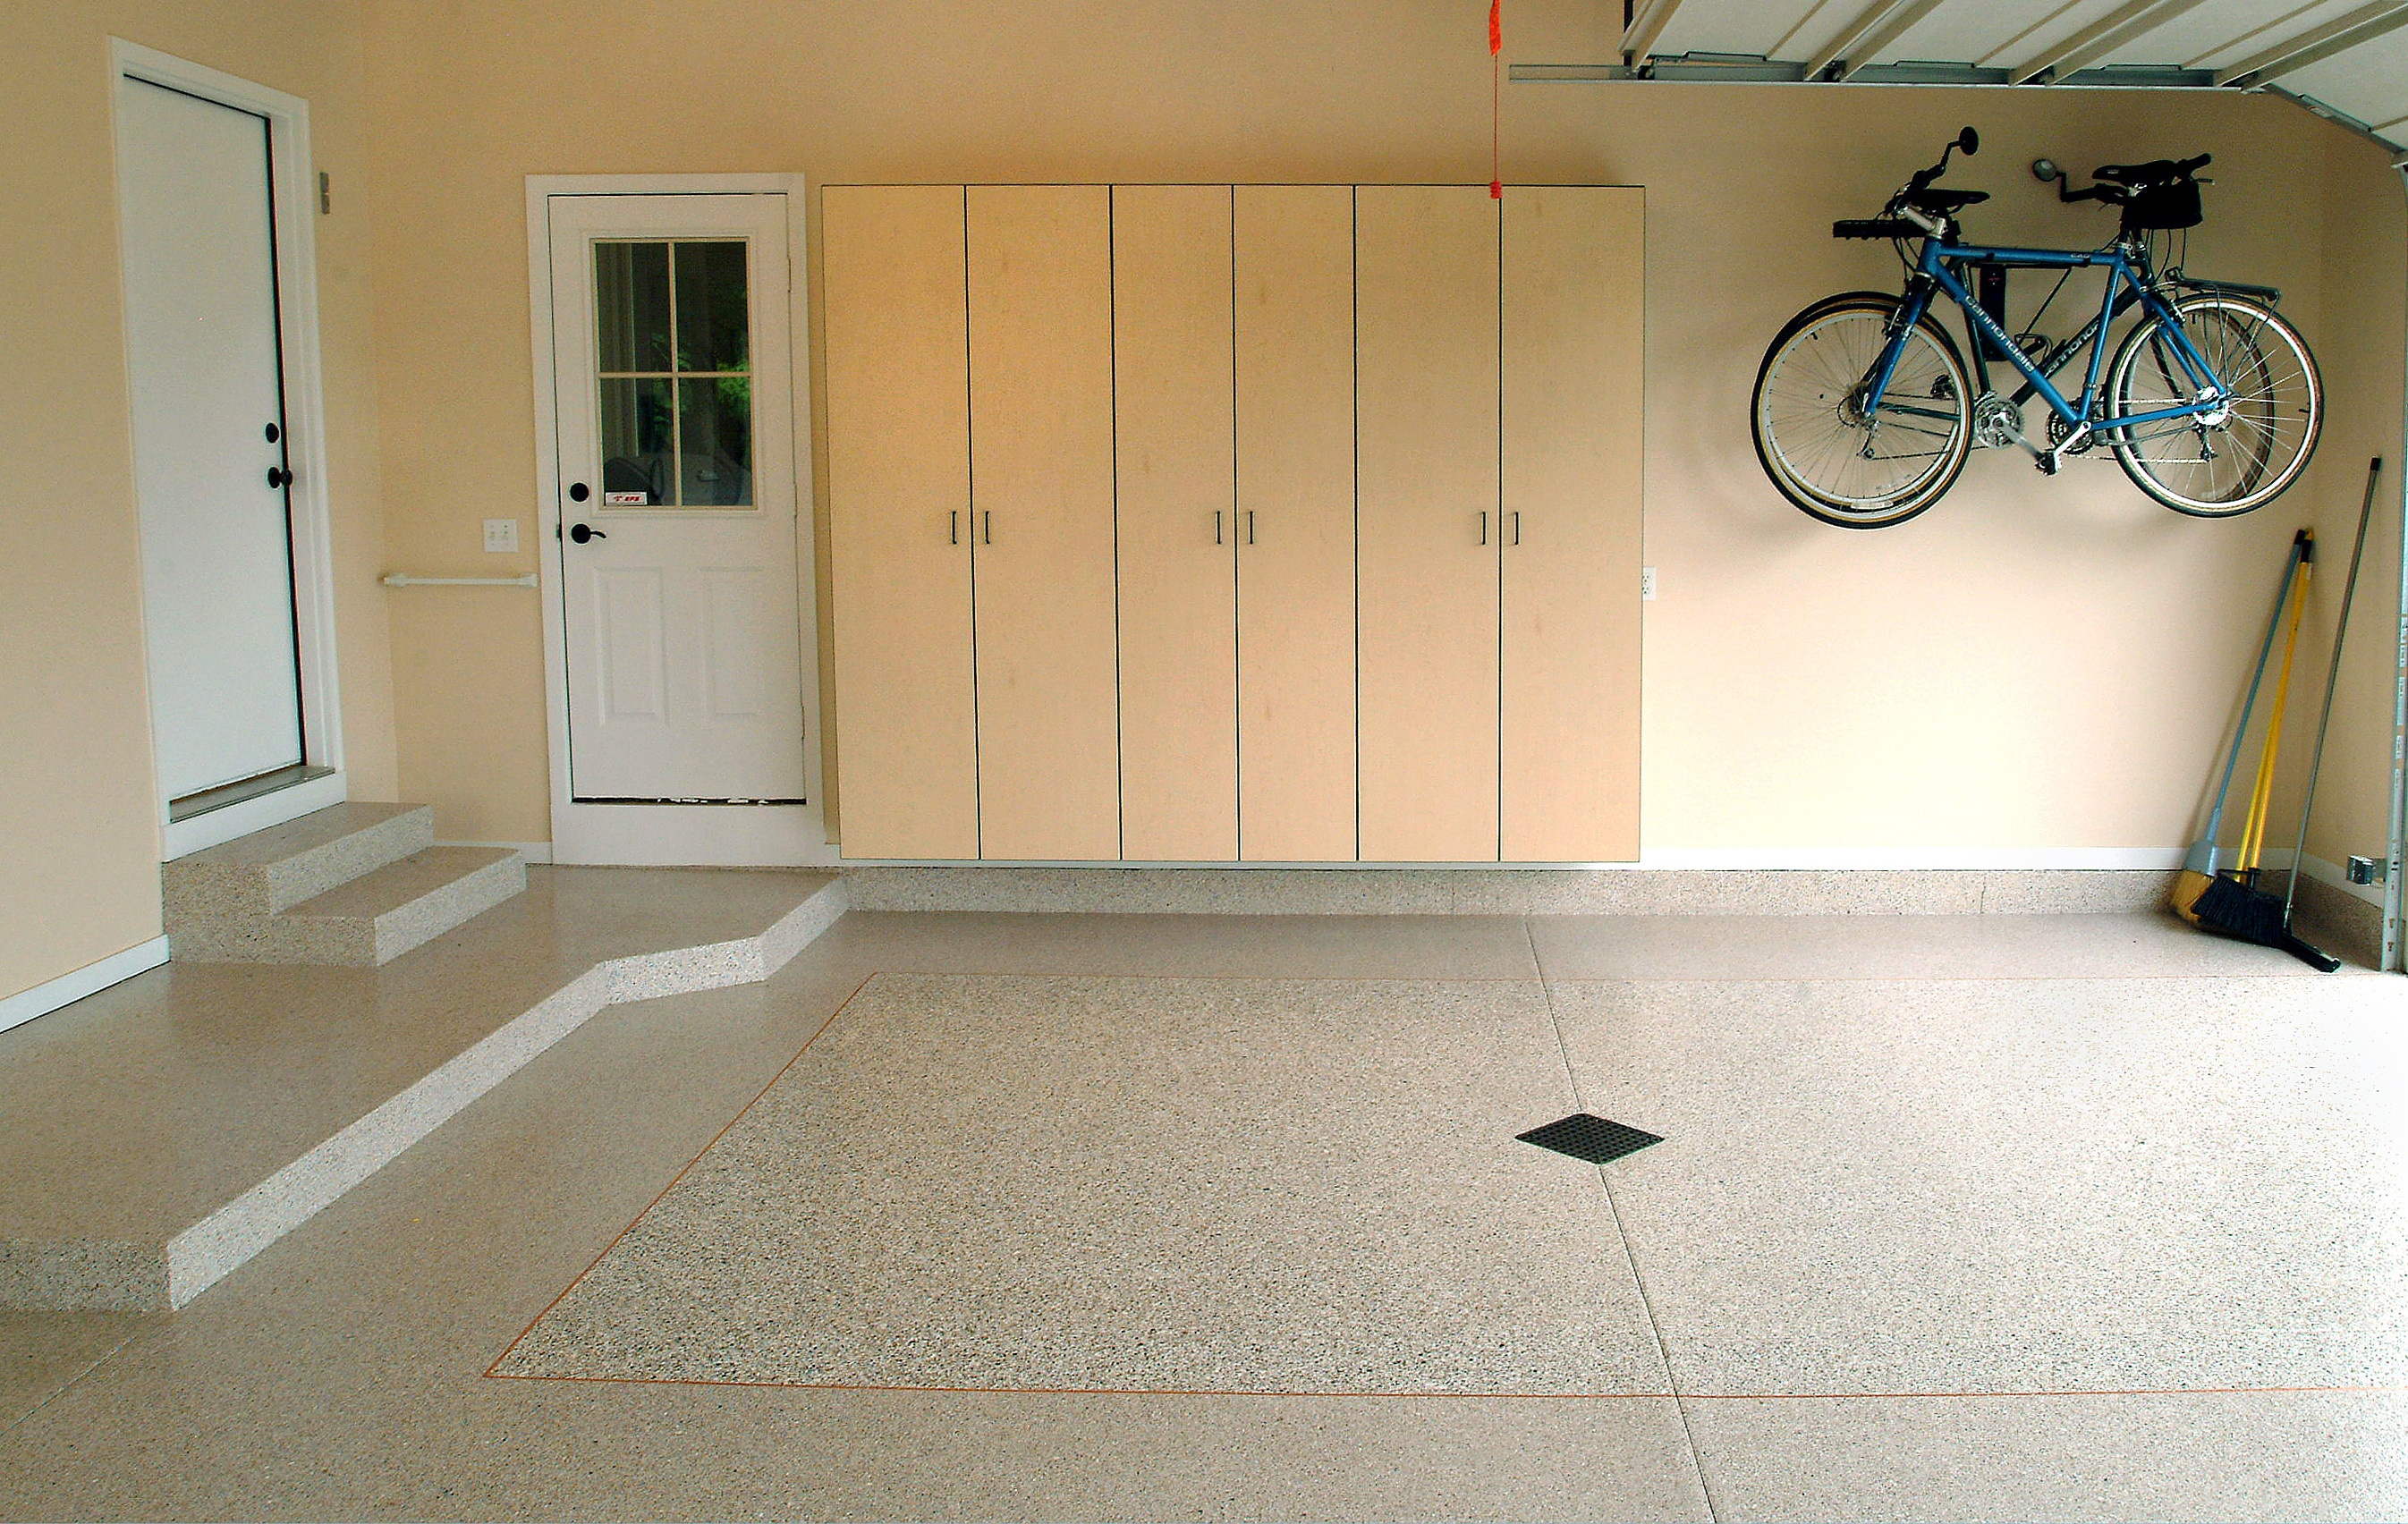 Best ideas about Best DIY Garage Floor Epoxy
. Save or Pin DIY Epoxy Garage Floor coating Now.